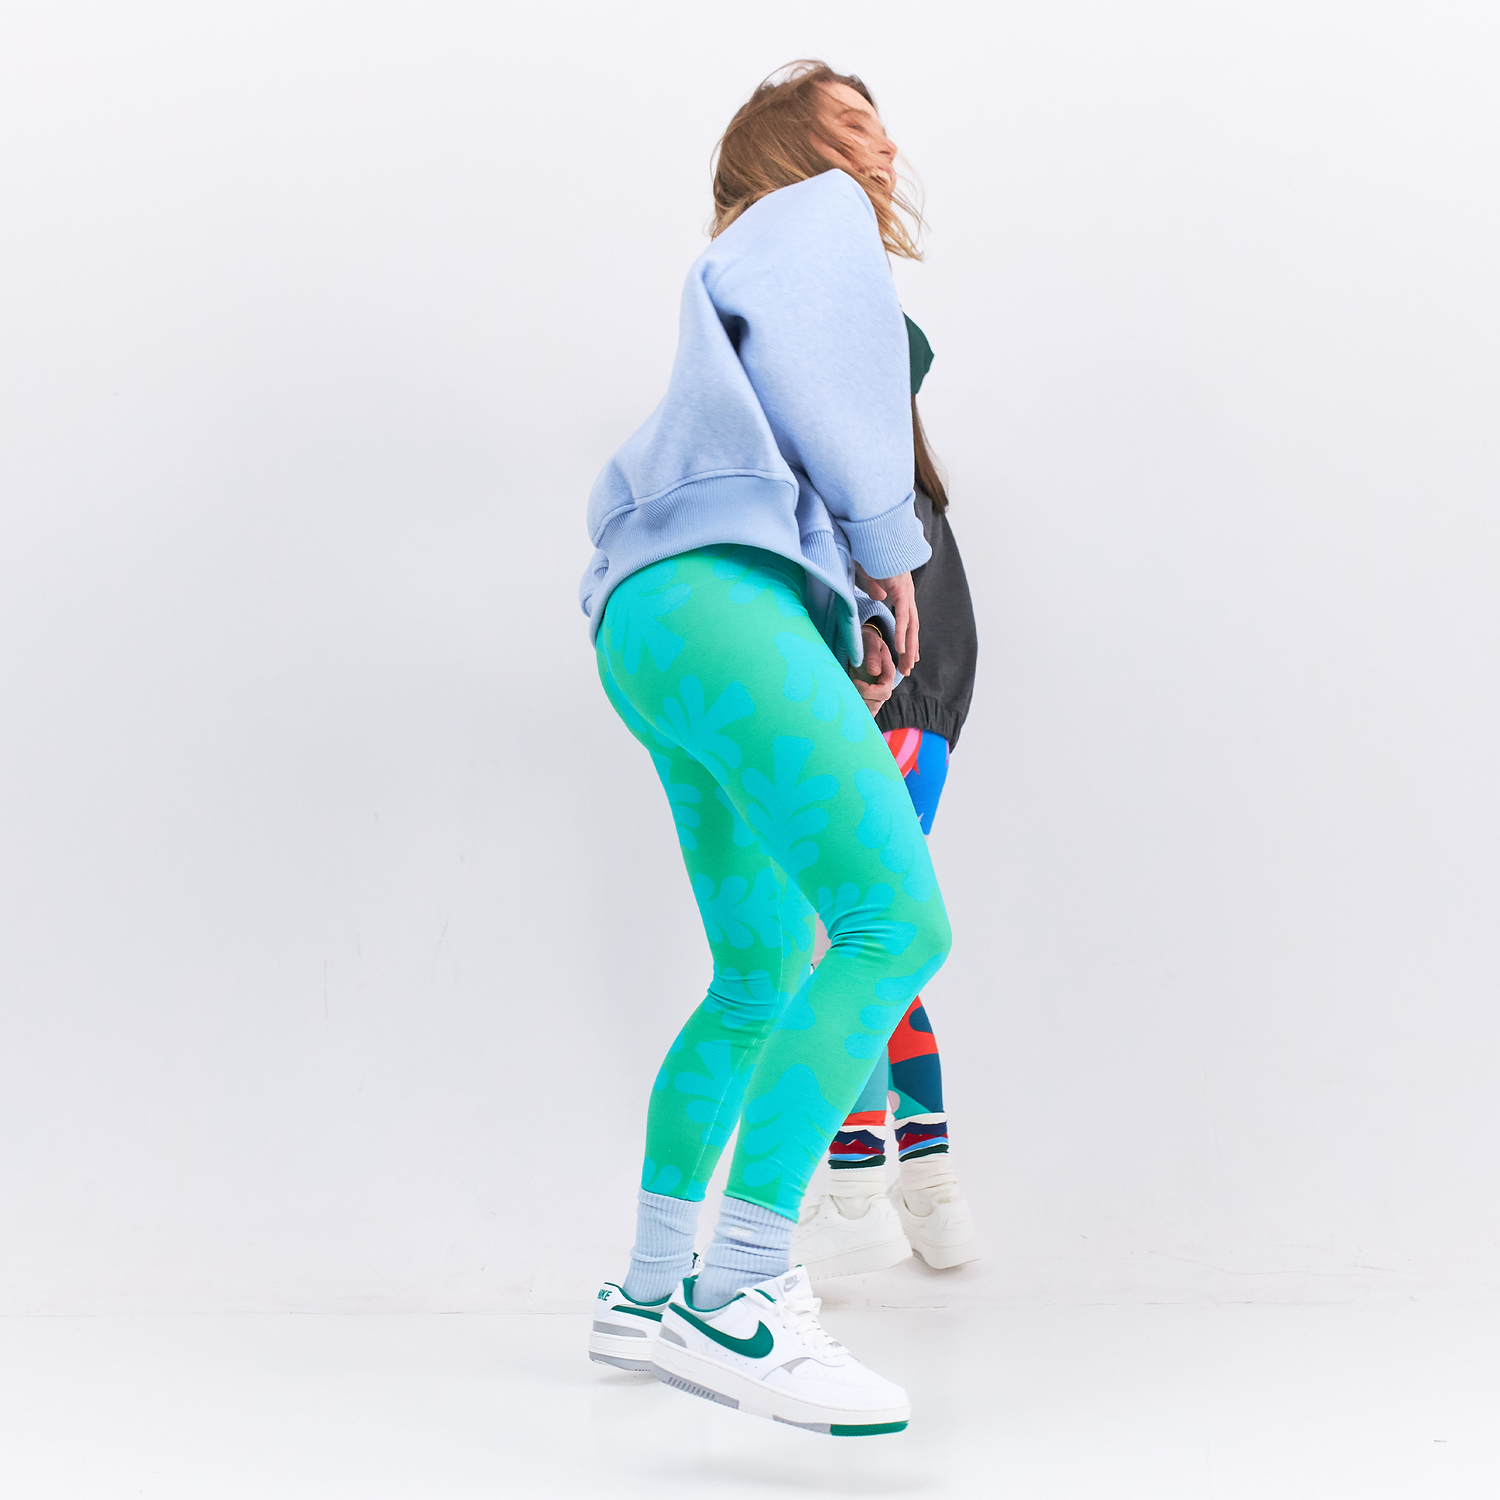 Crazy Legs online store - Colorful leggings for kids & women